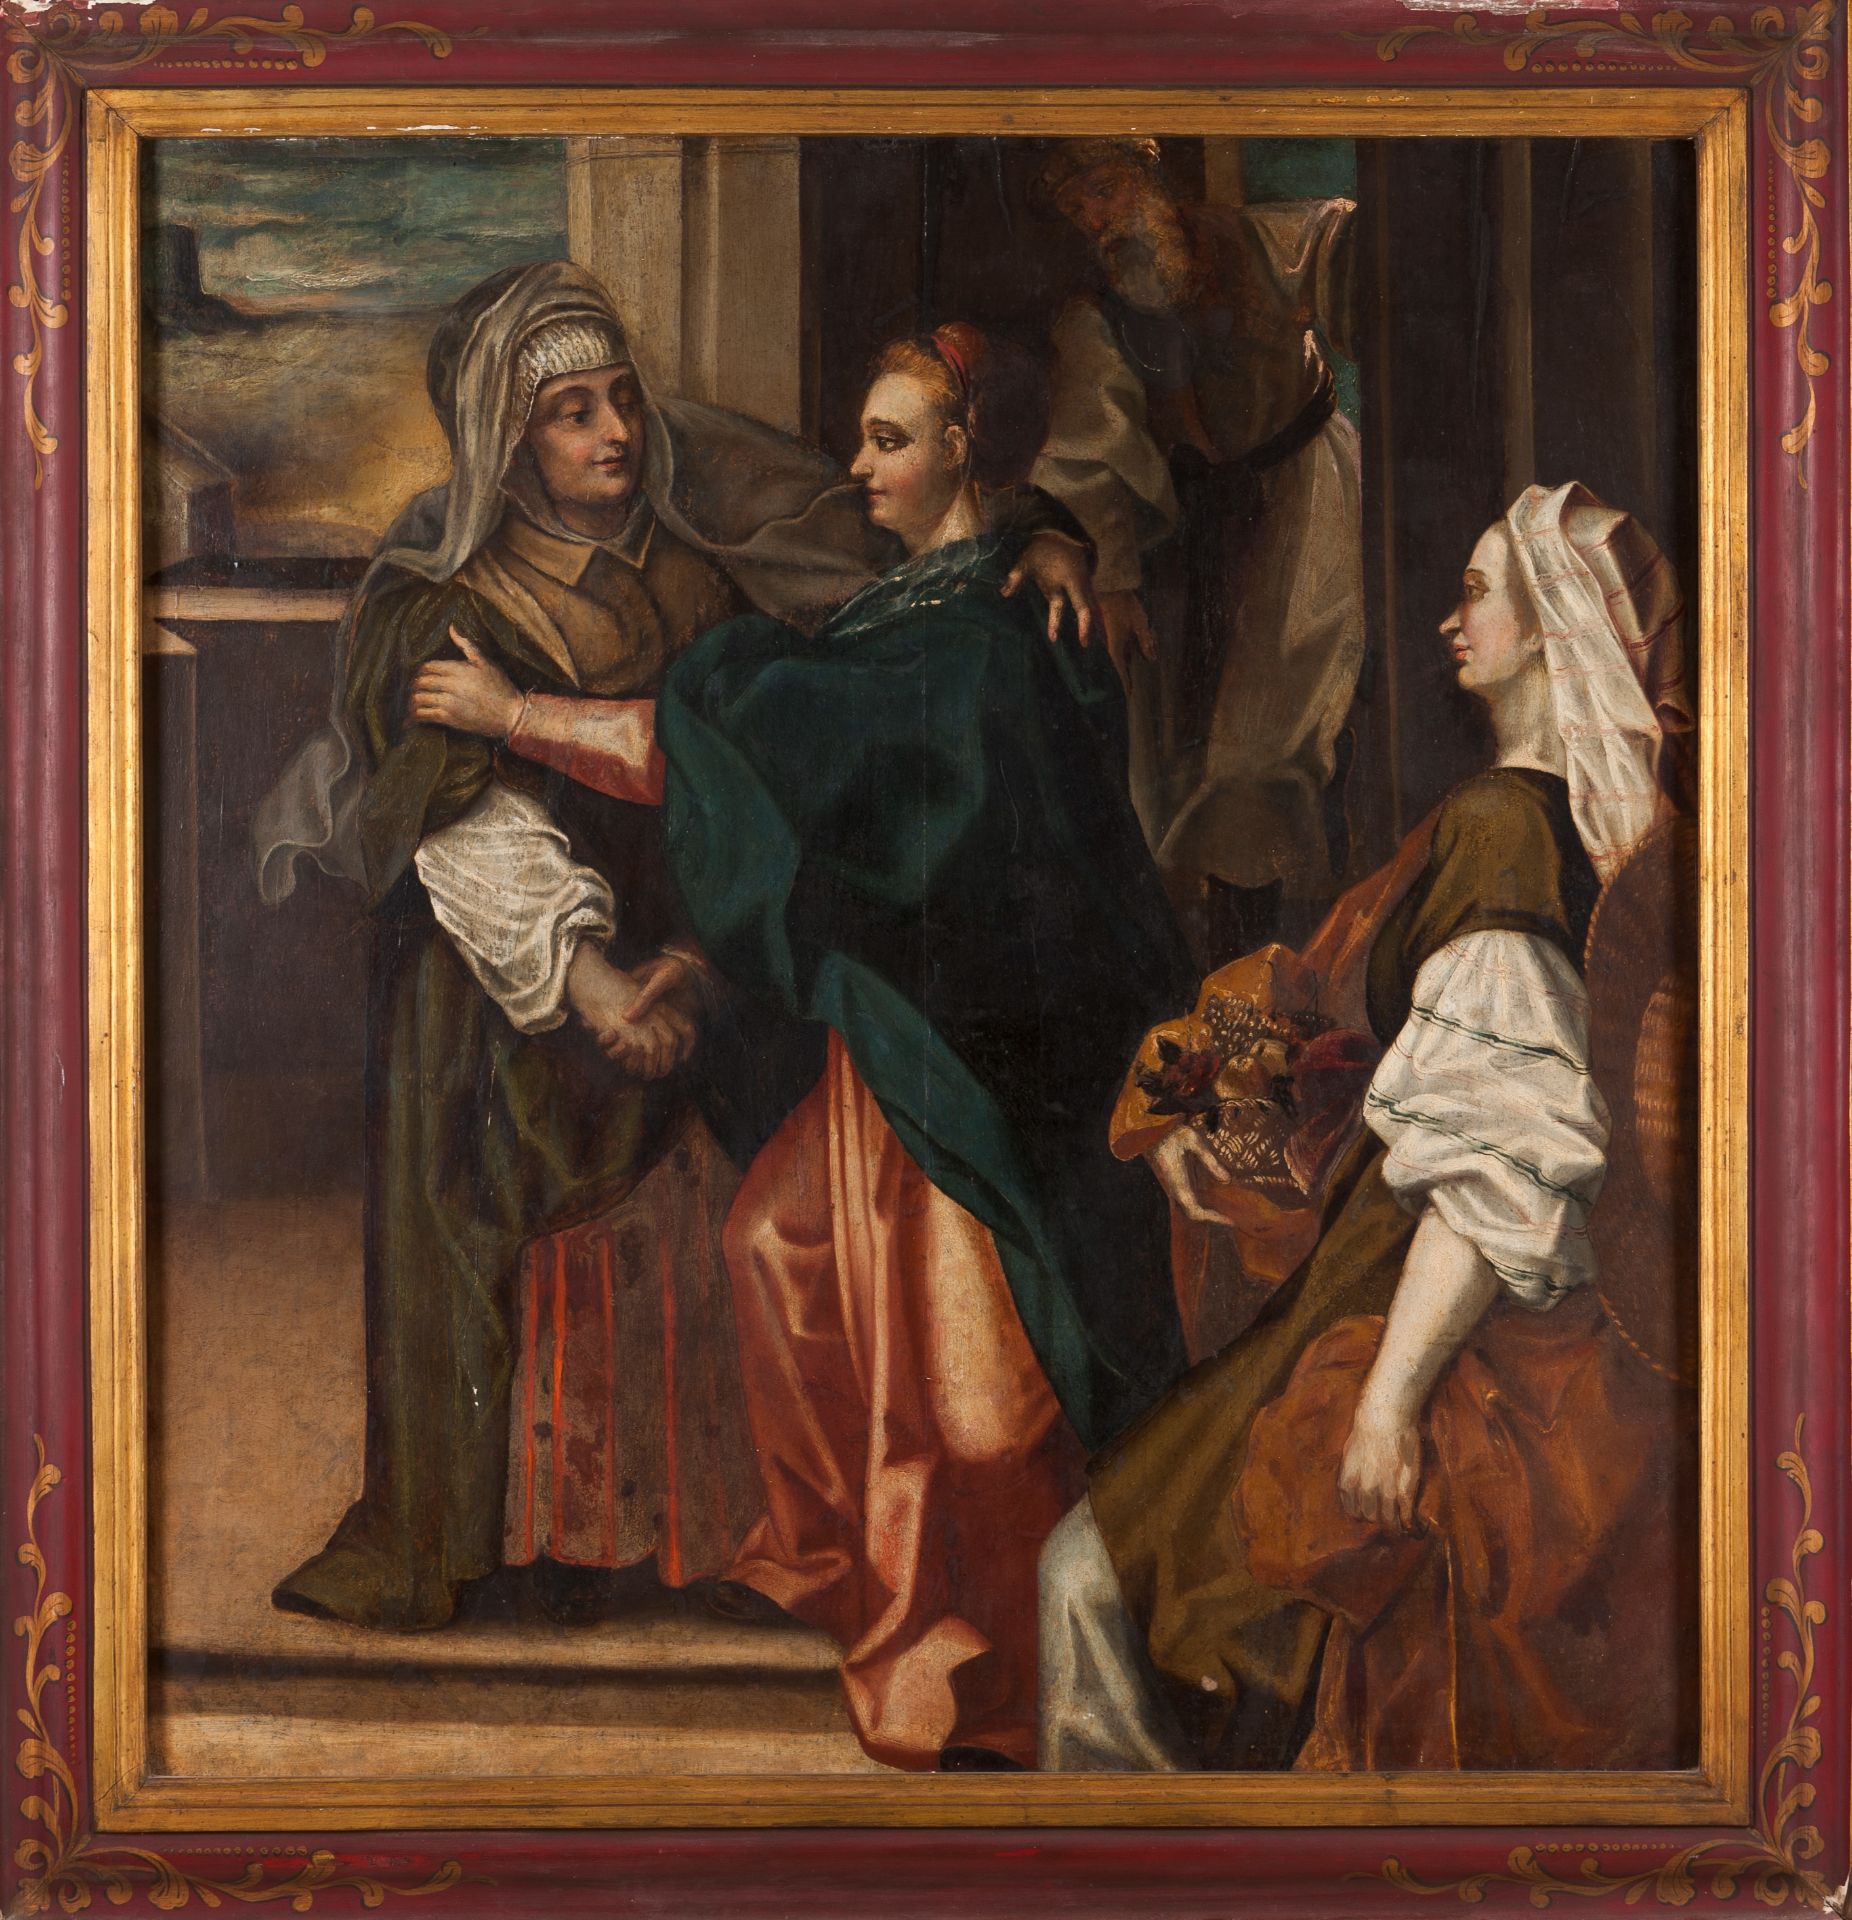 Portuguese school, 16th / 17th centuryThe Visitation of the Virgin to Her cousin, Saint Elizabeth